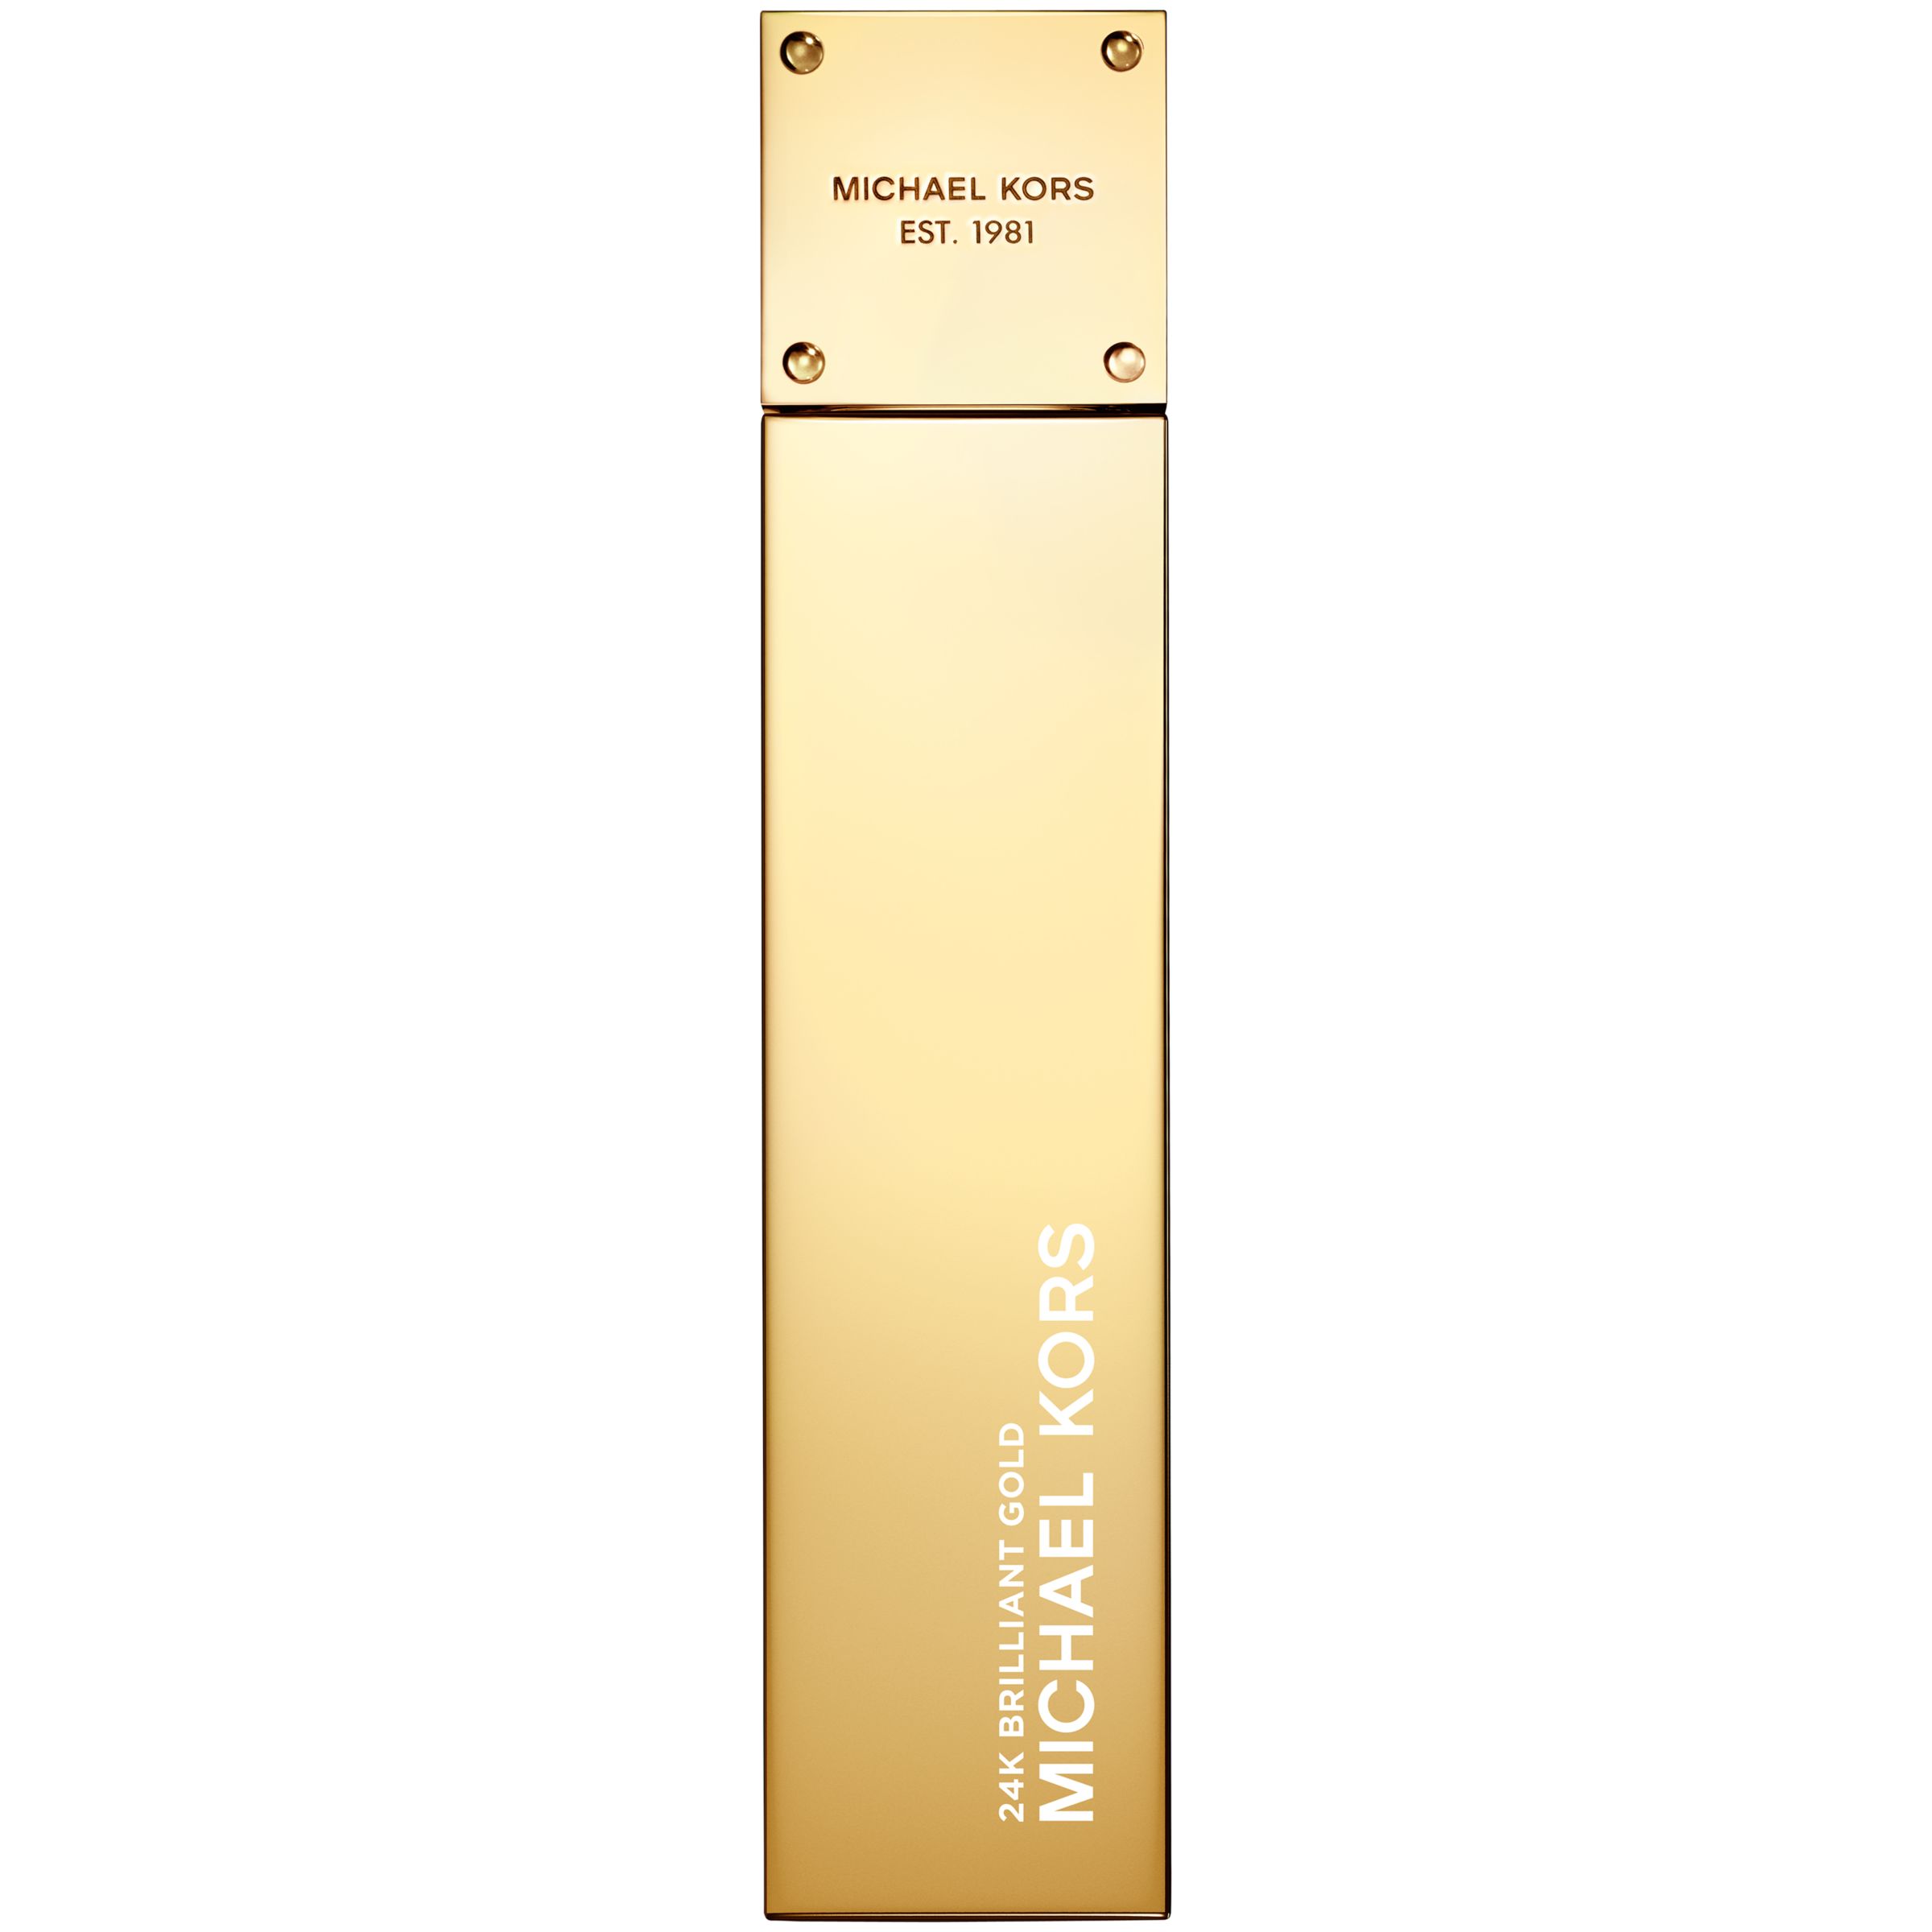 michael kors 24k brilliant gold perfume review